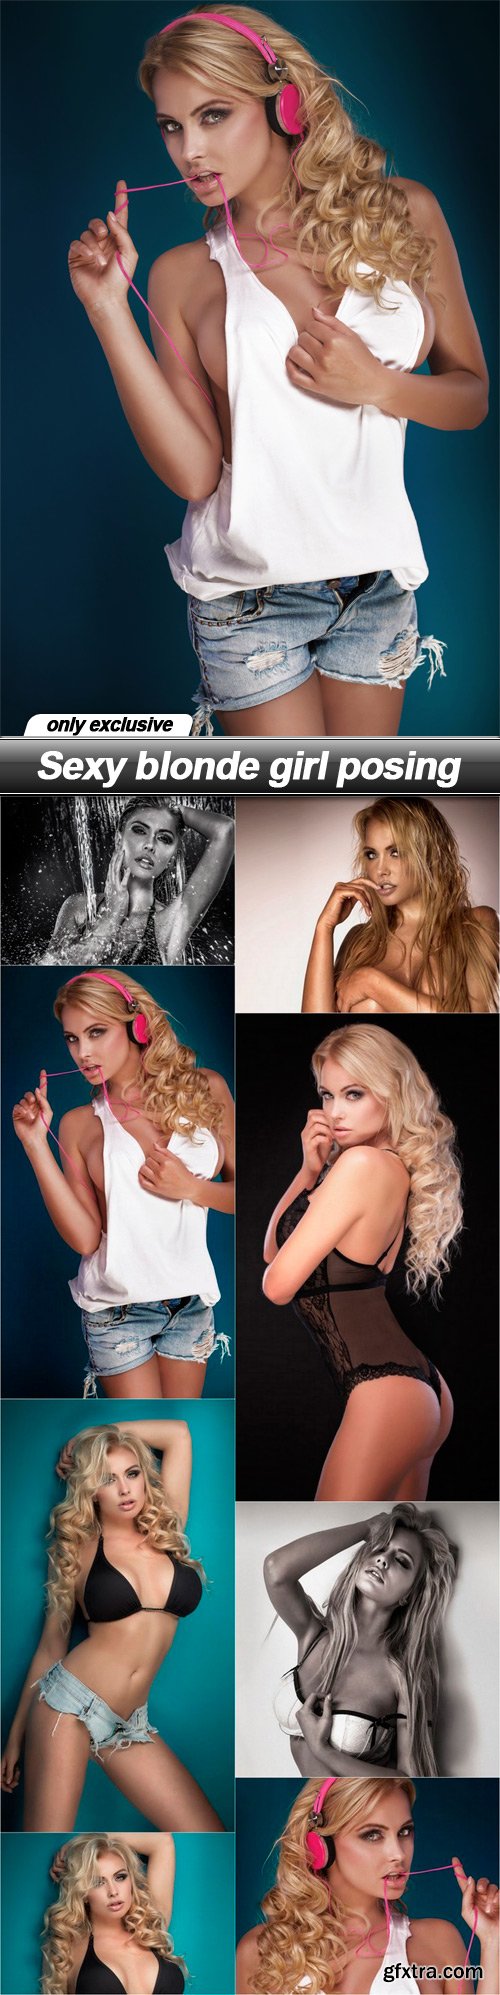 Sexy blonde girl posing - 8 UHQ JPEG